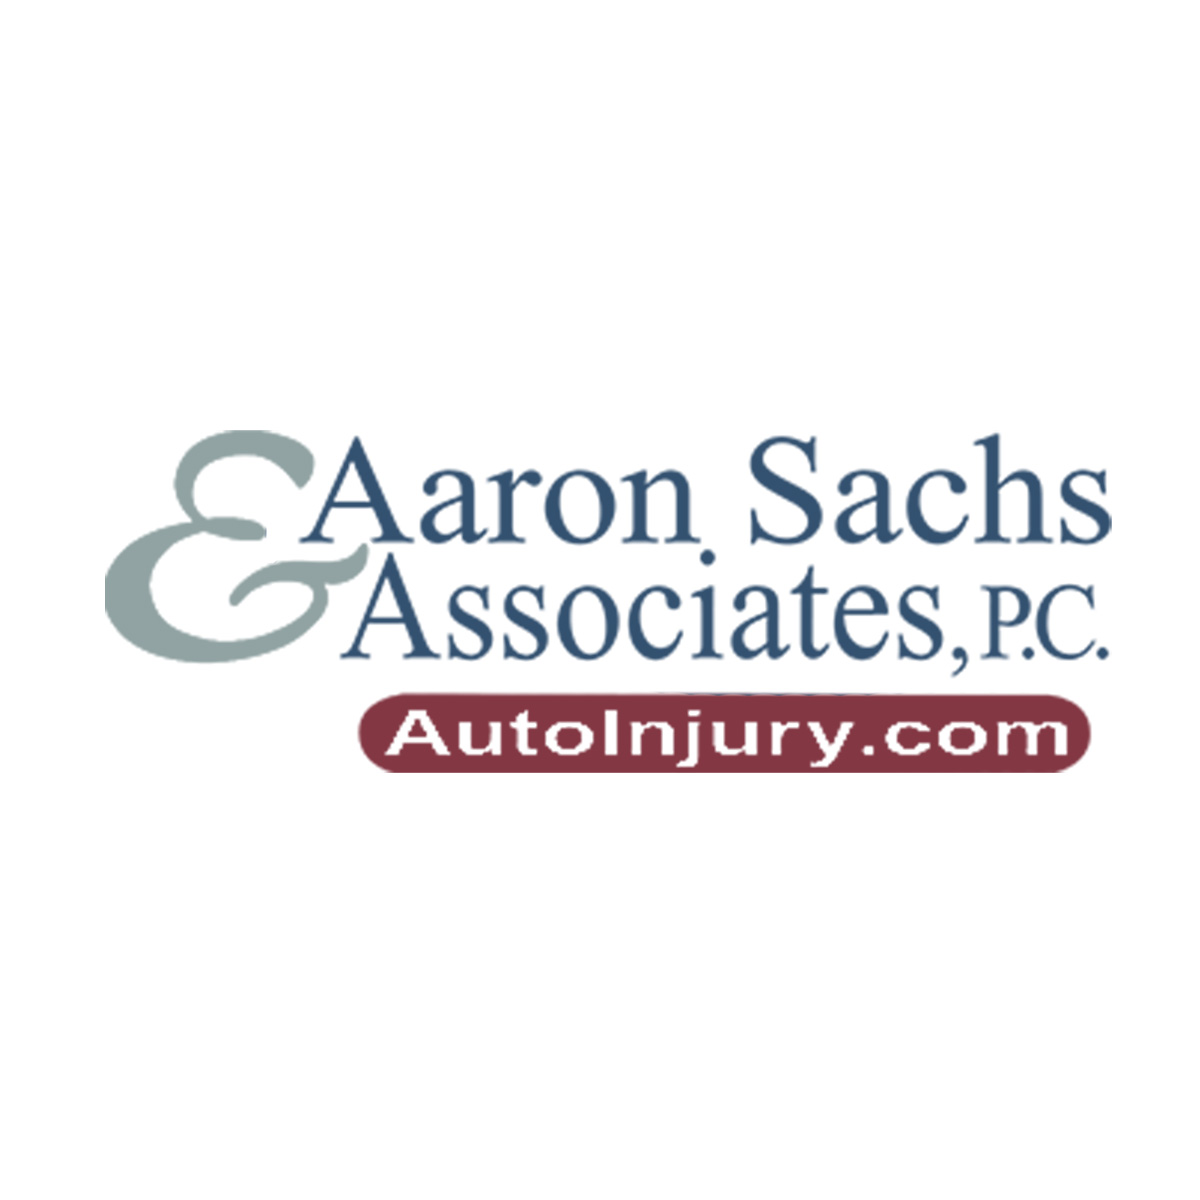 Aaron Sachs & Associates, P.C. - Joplin, MO 64804 - (417)889-1400 | ShowMeLocal.com